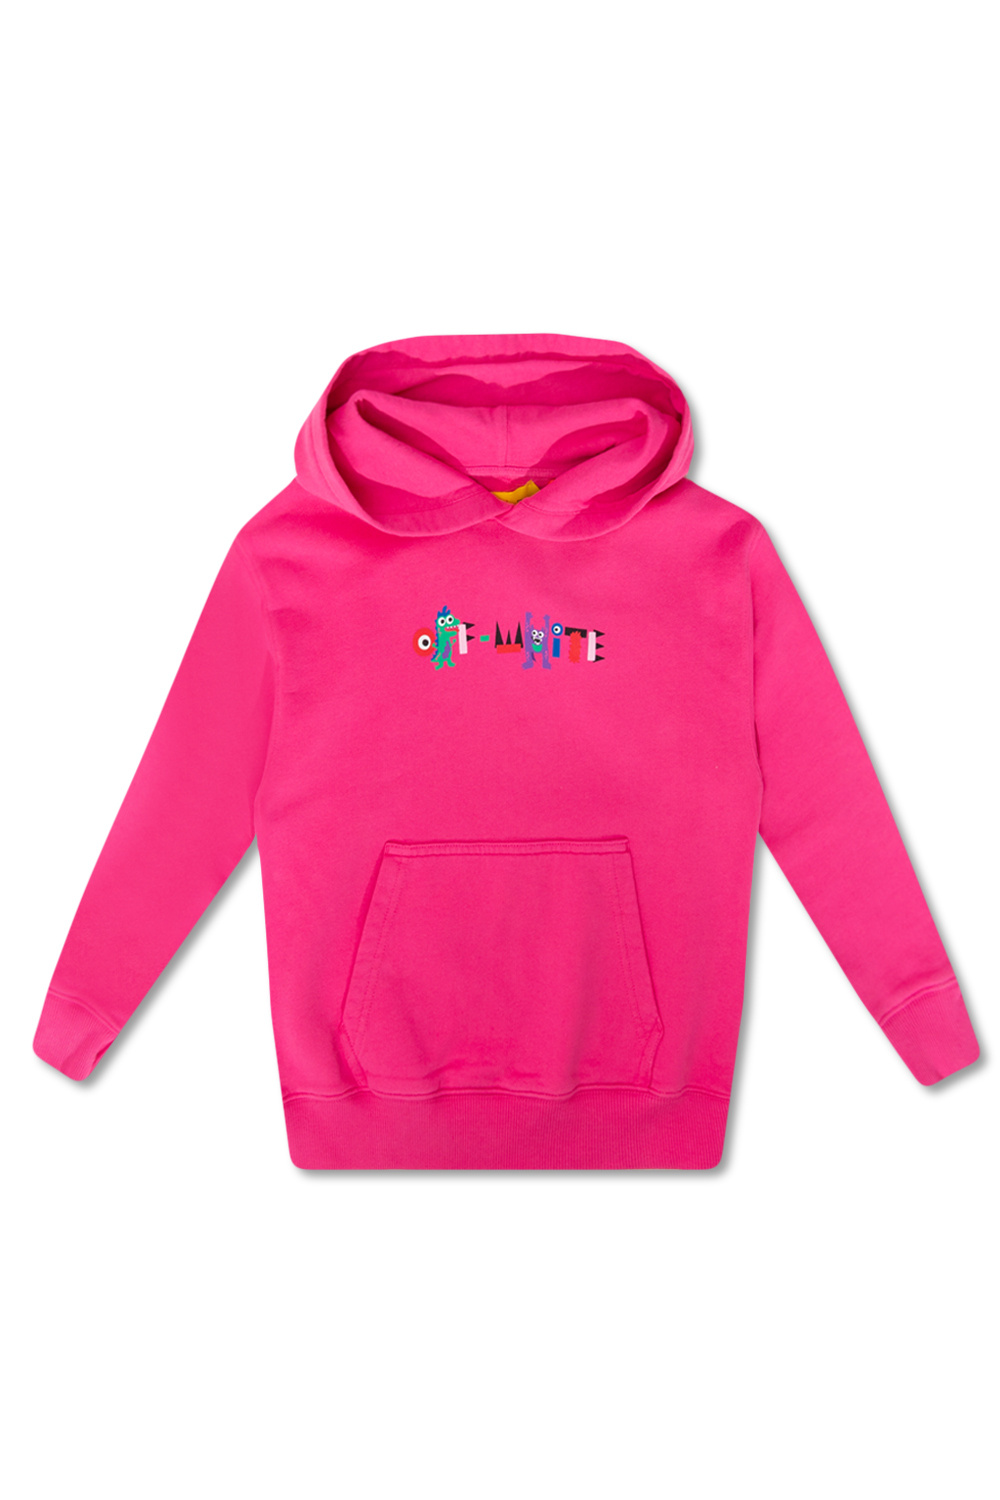 Stella McCartney Kids logo-patch zipped-up hoodie - Pink